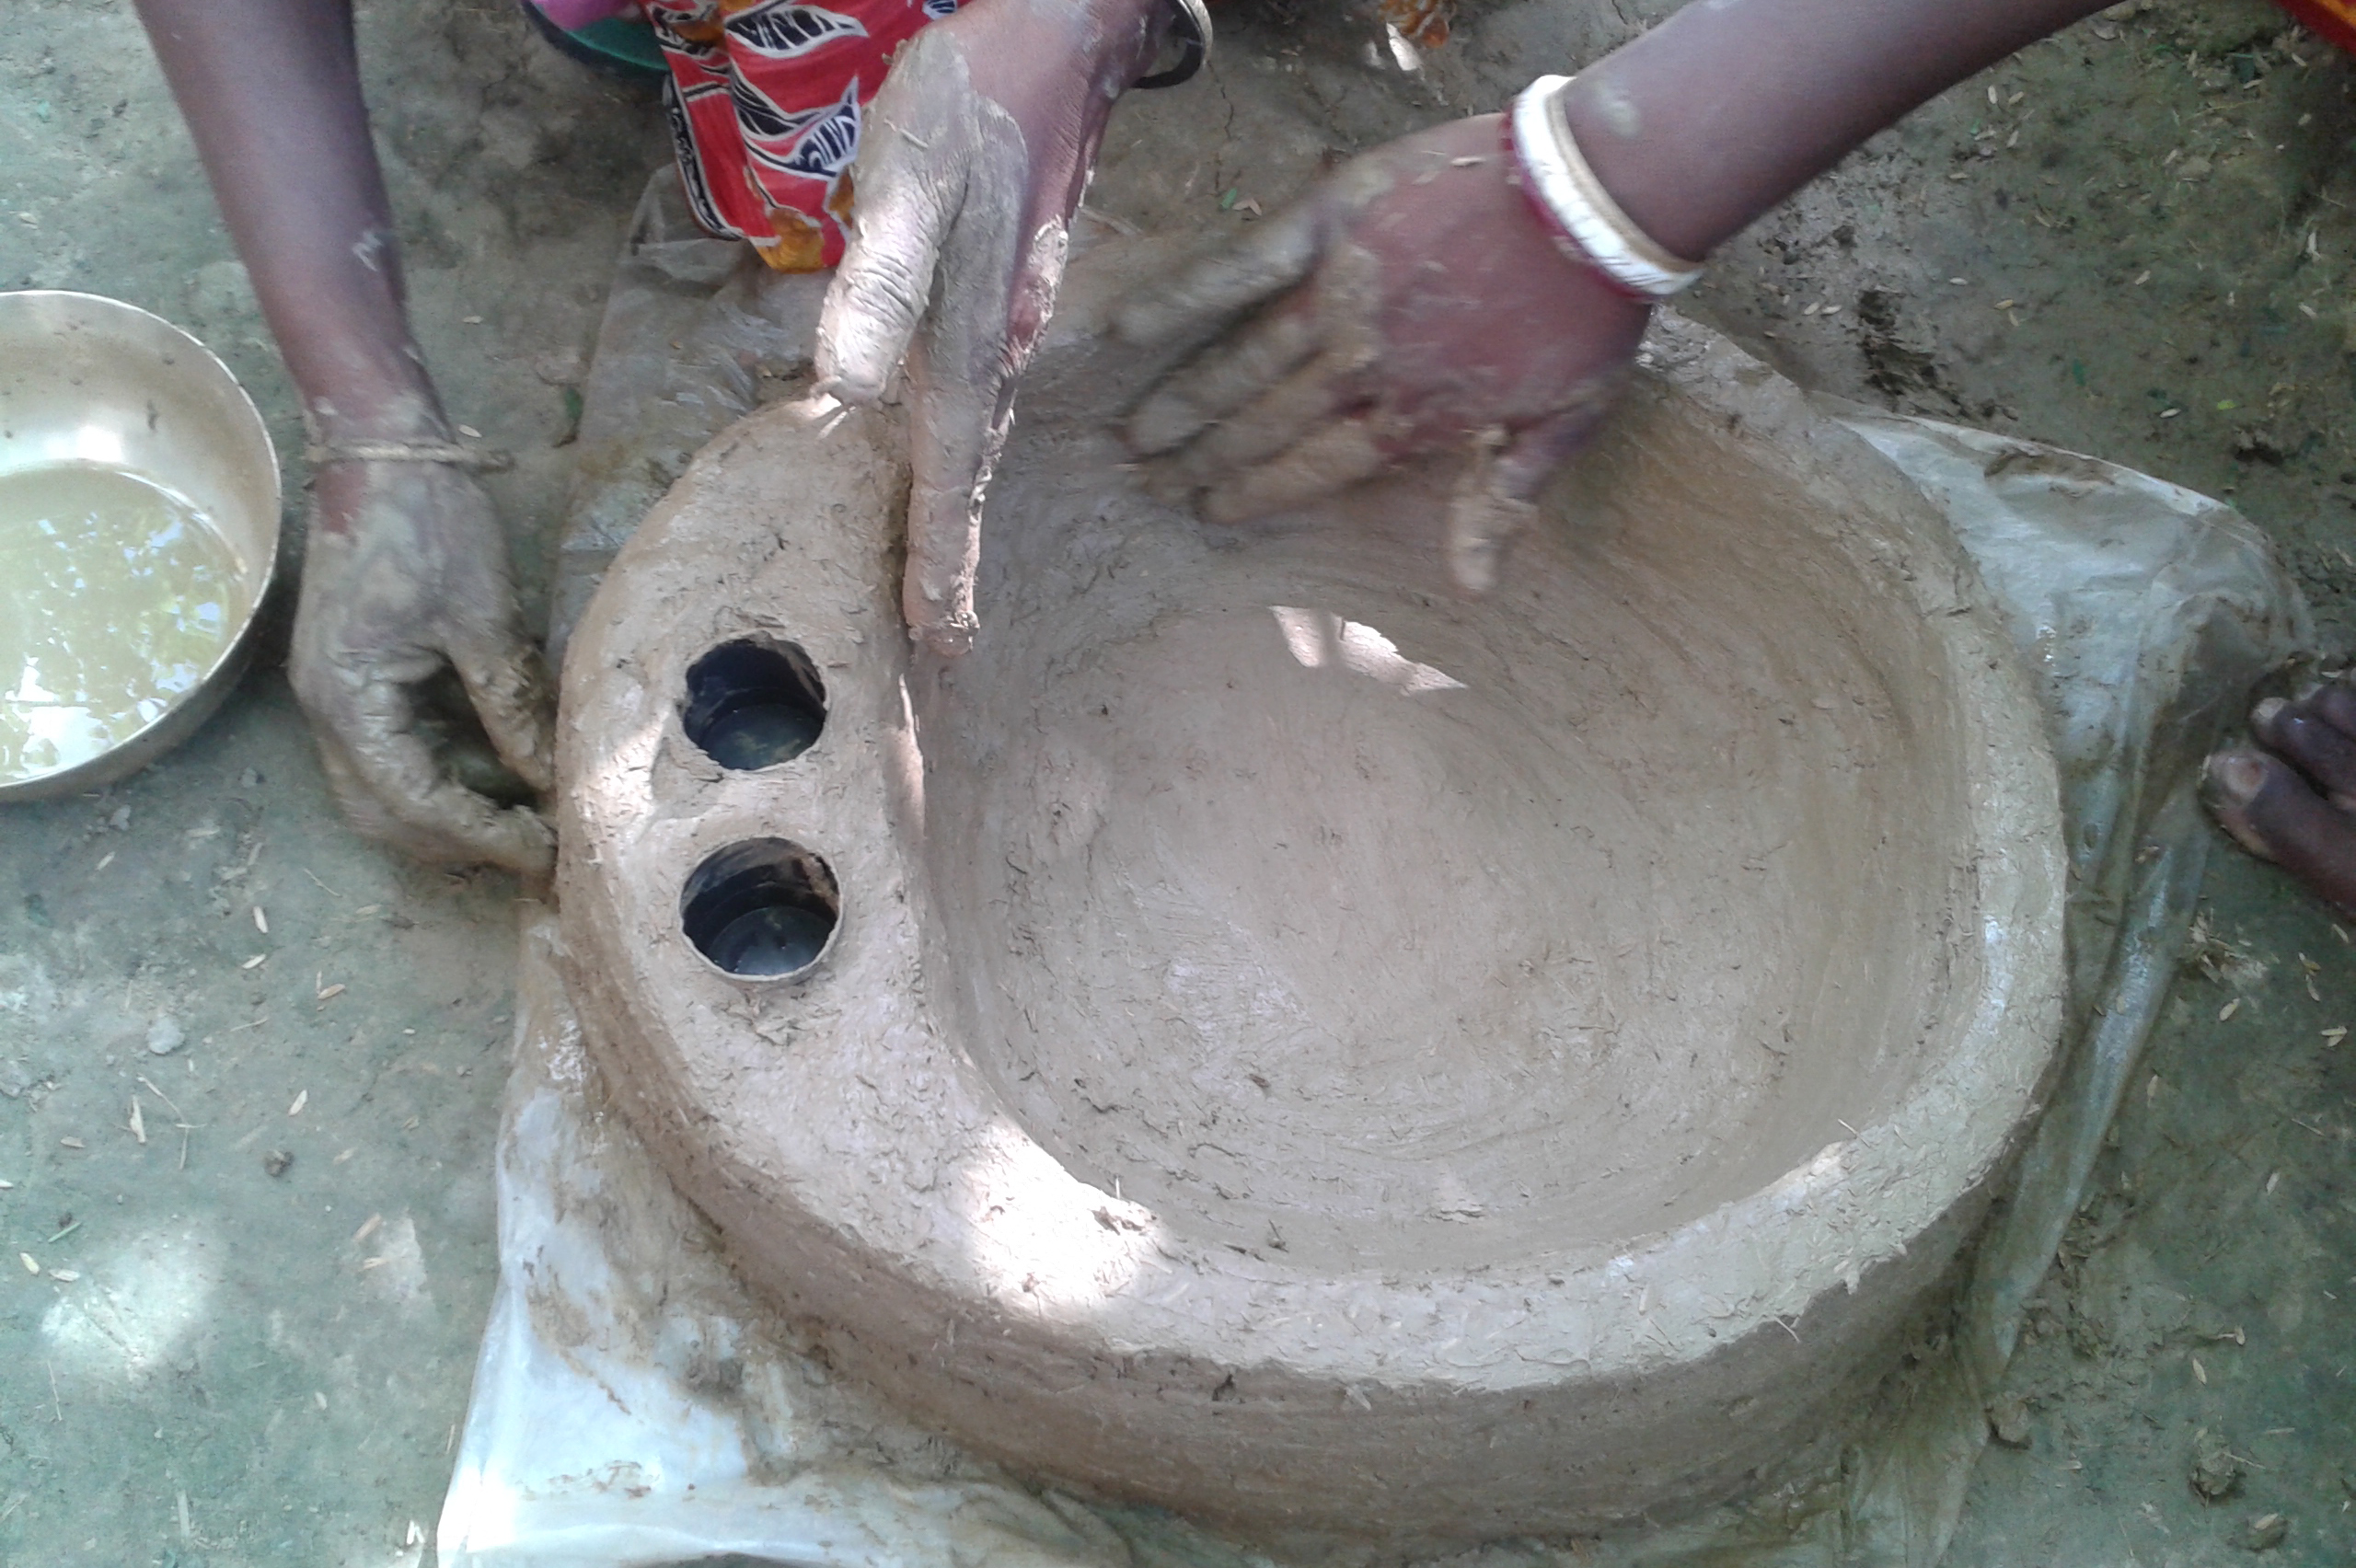 Hands sculpting a hatching pot.